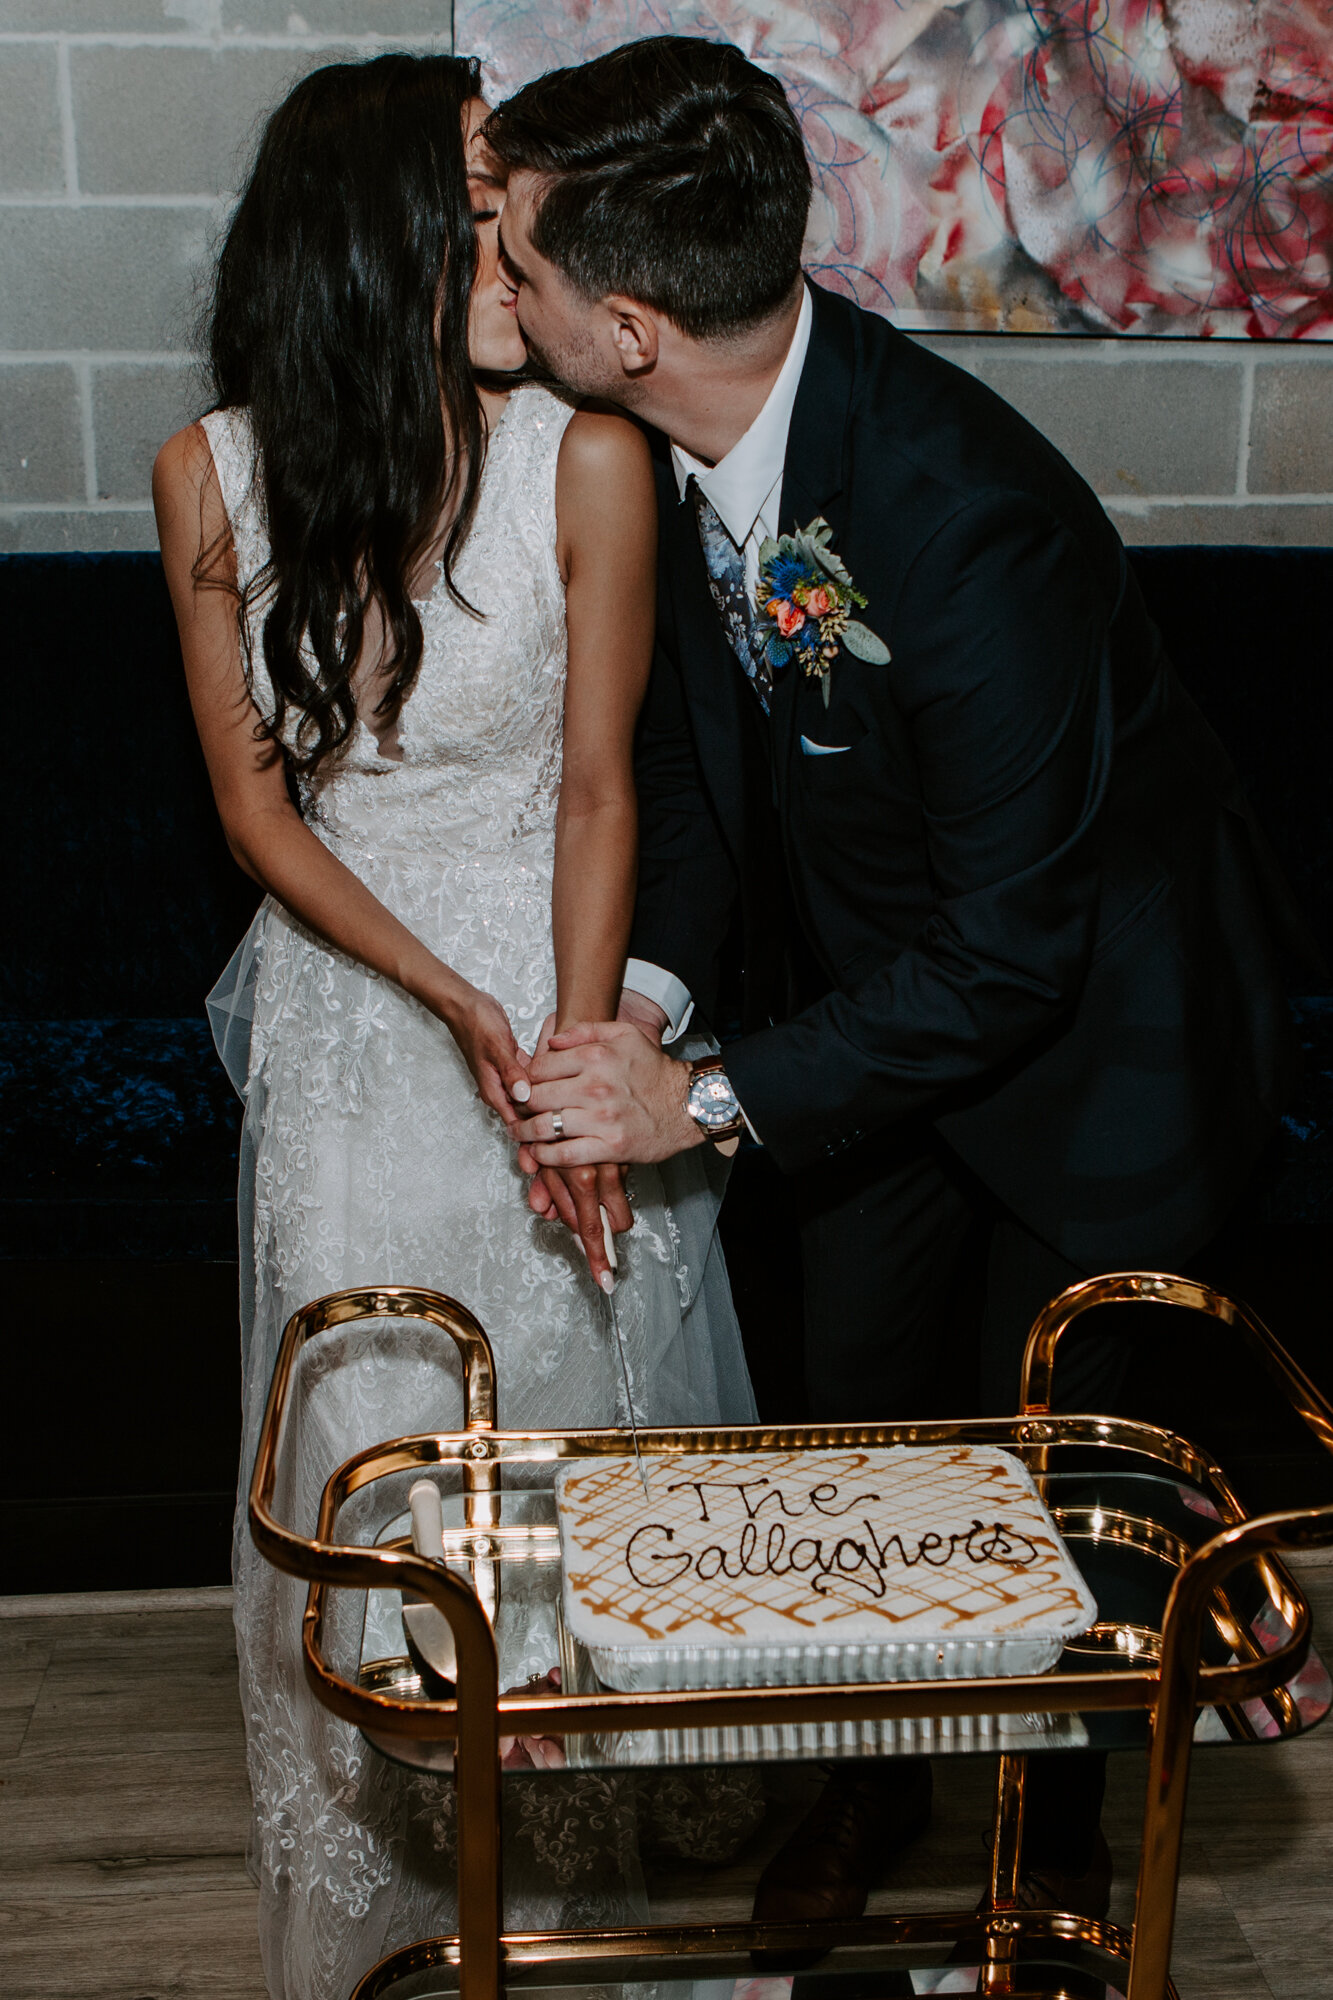 Bride and groom cake cutting. Wedding Reception at Texas Avenue BNB